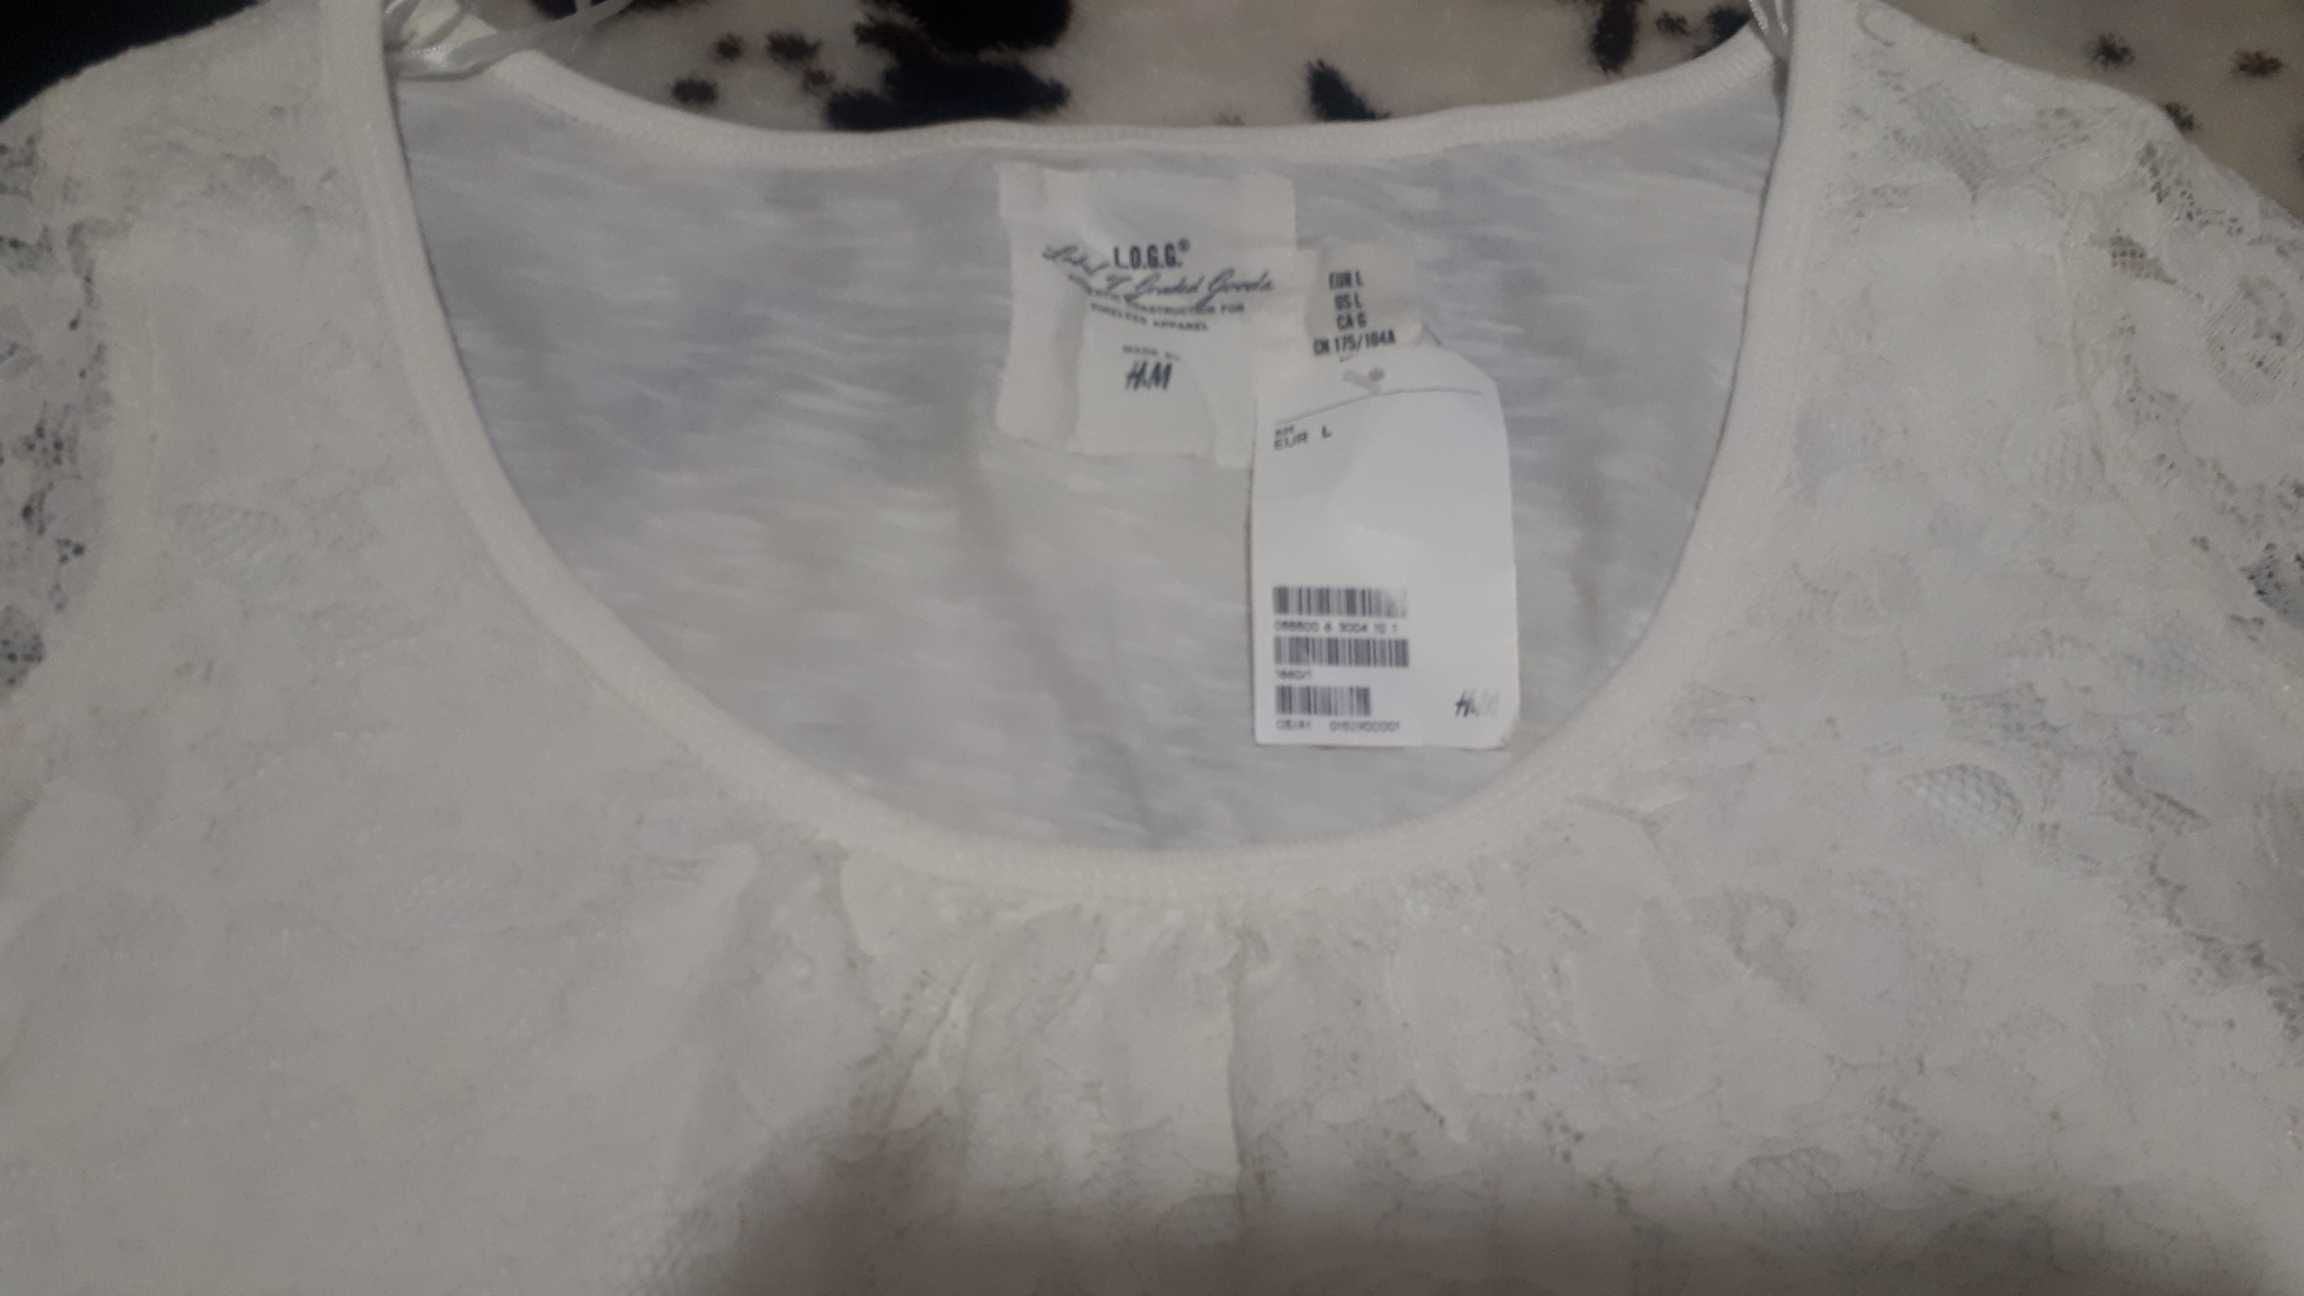 Новая брендовая блузка/кофточка "H&M", 44/46 рр